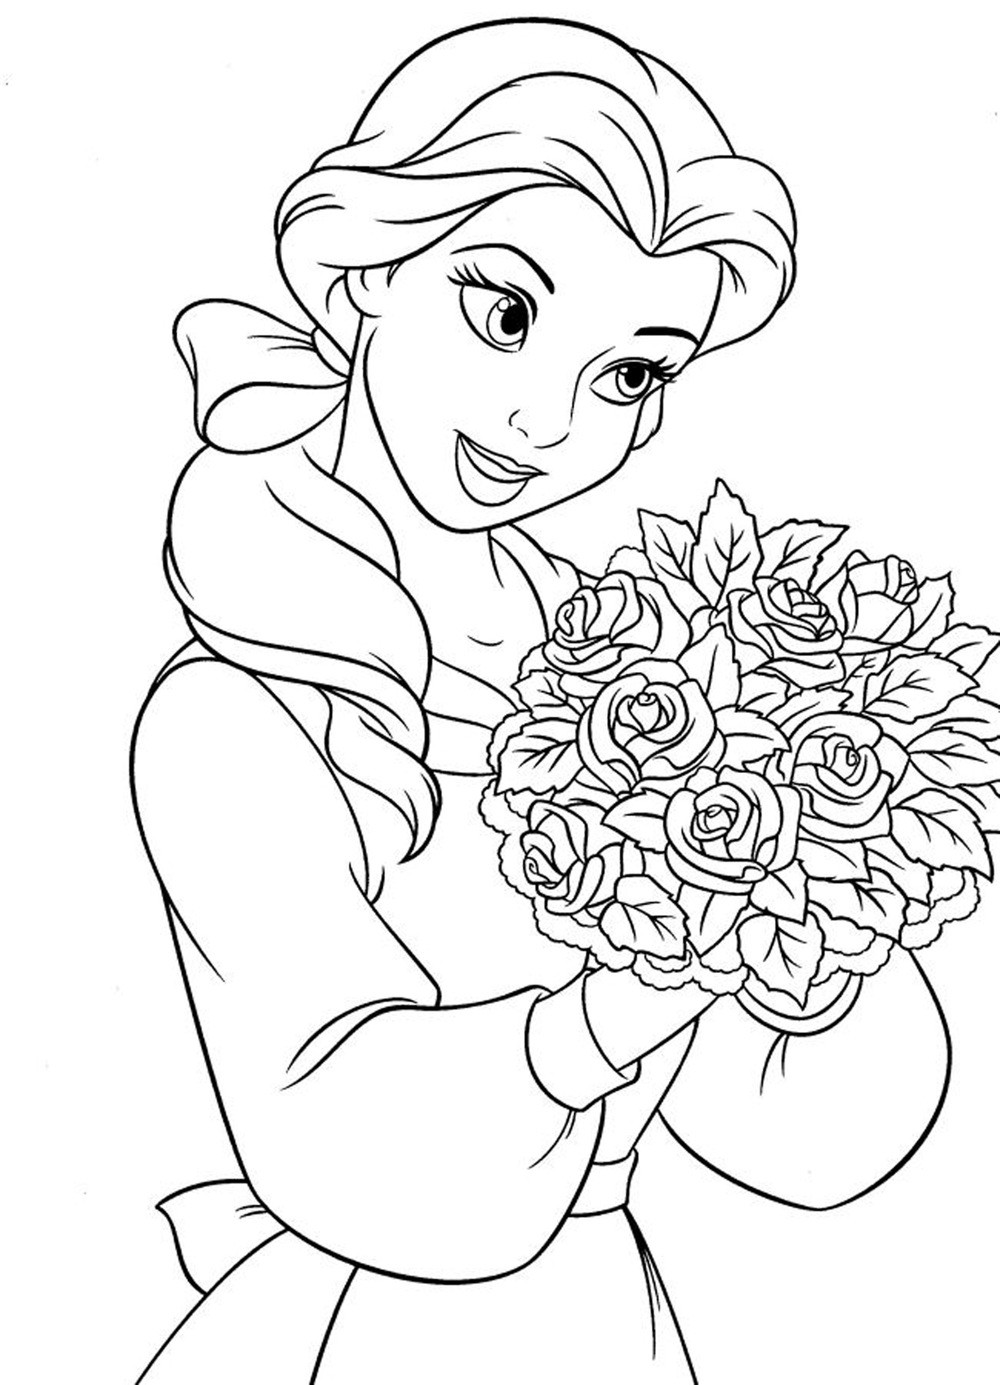 Disney Princess Coloring Pages For Kids
 Disney Princess Tiana Coloring Page Disney